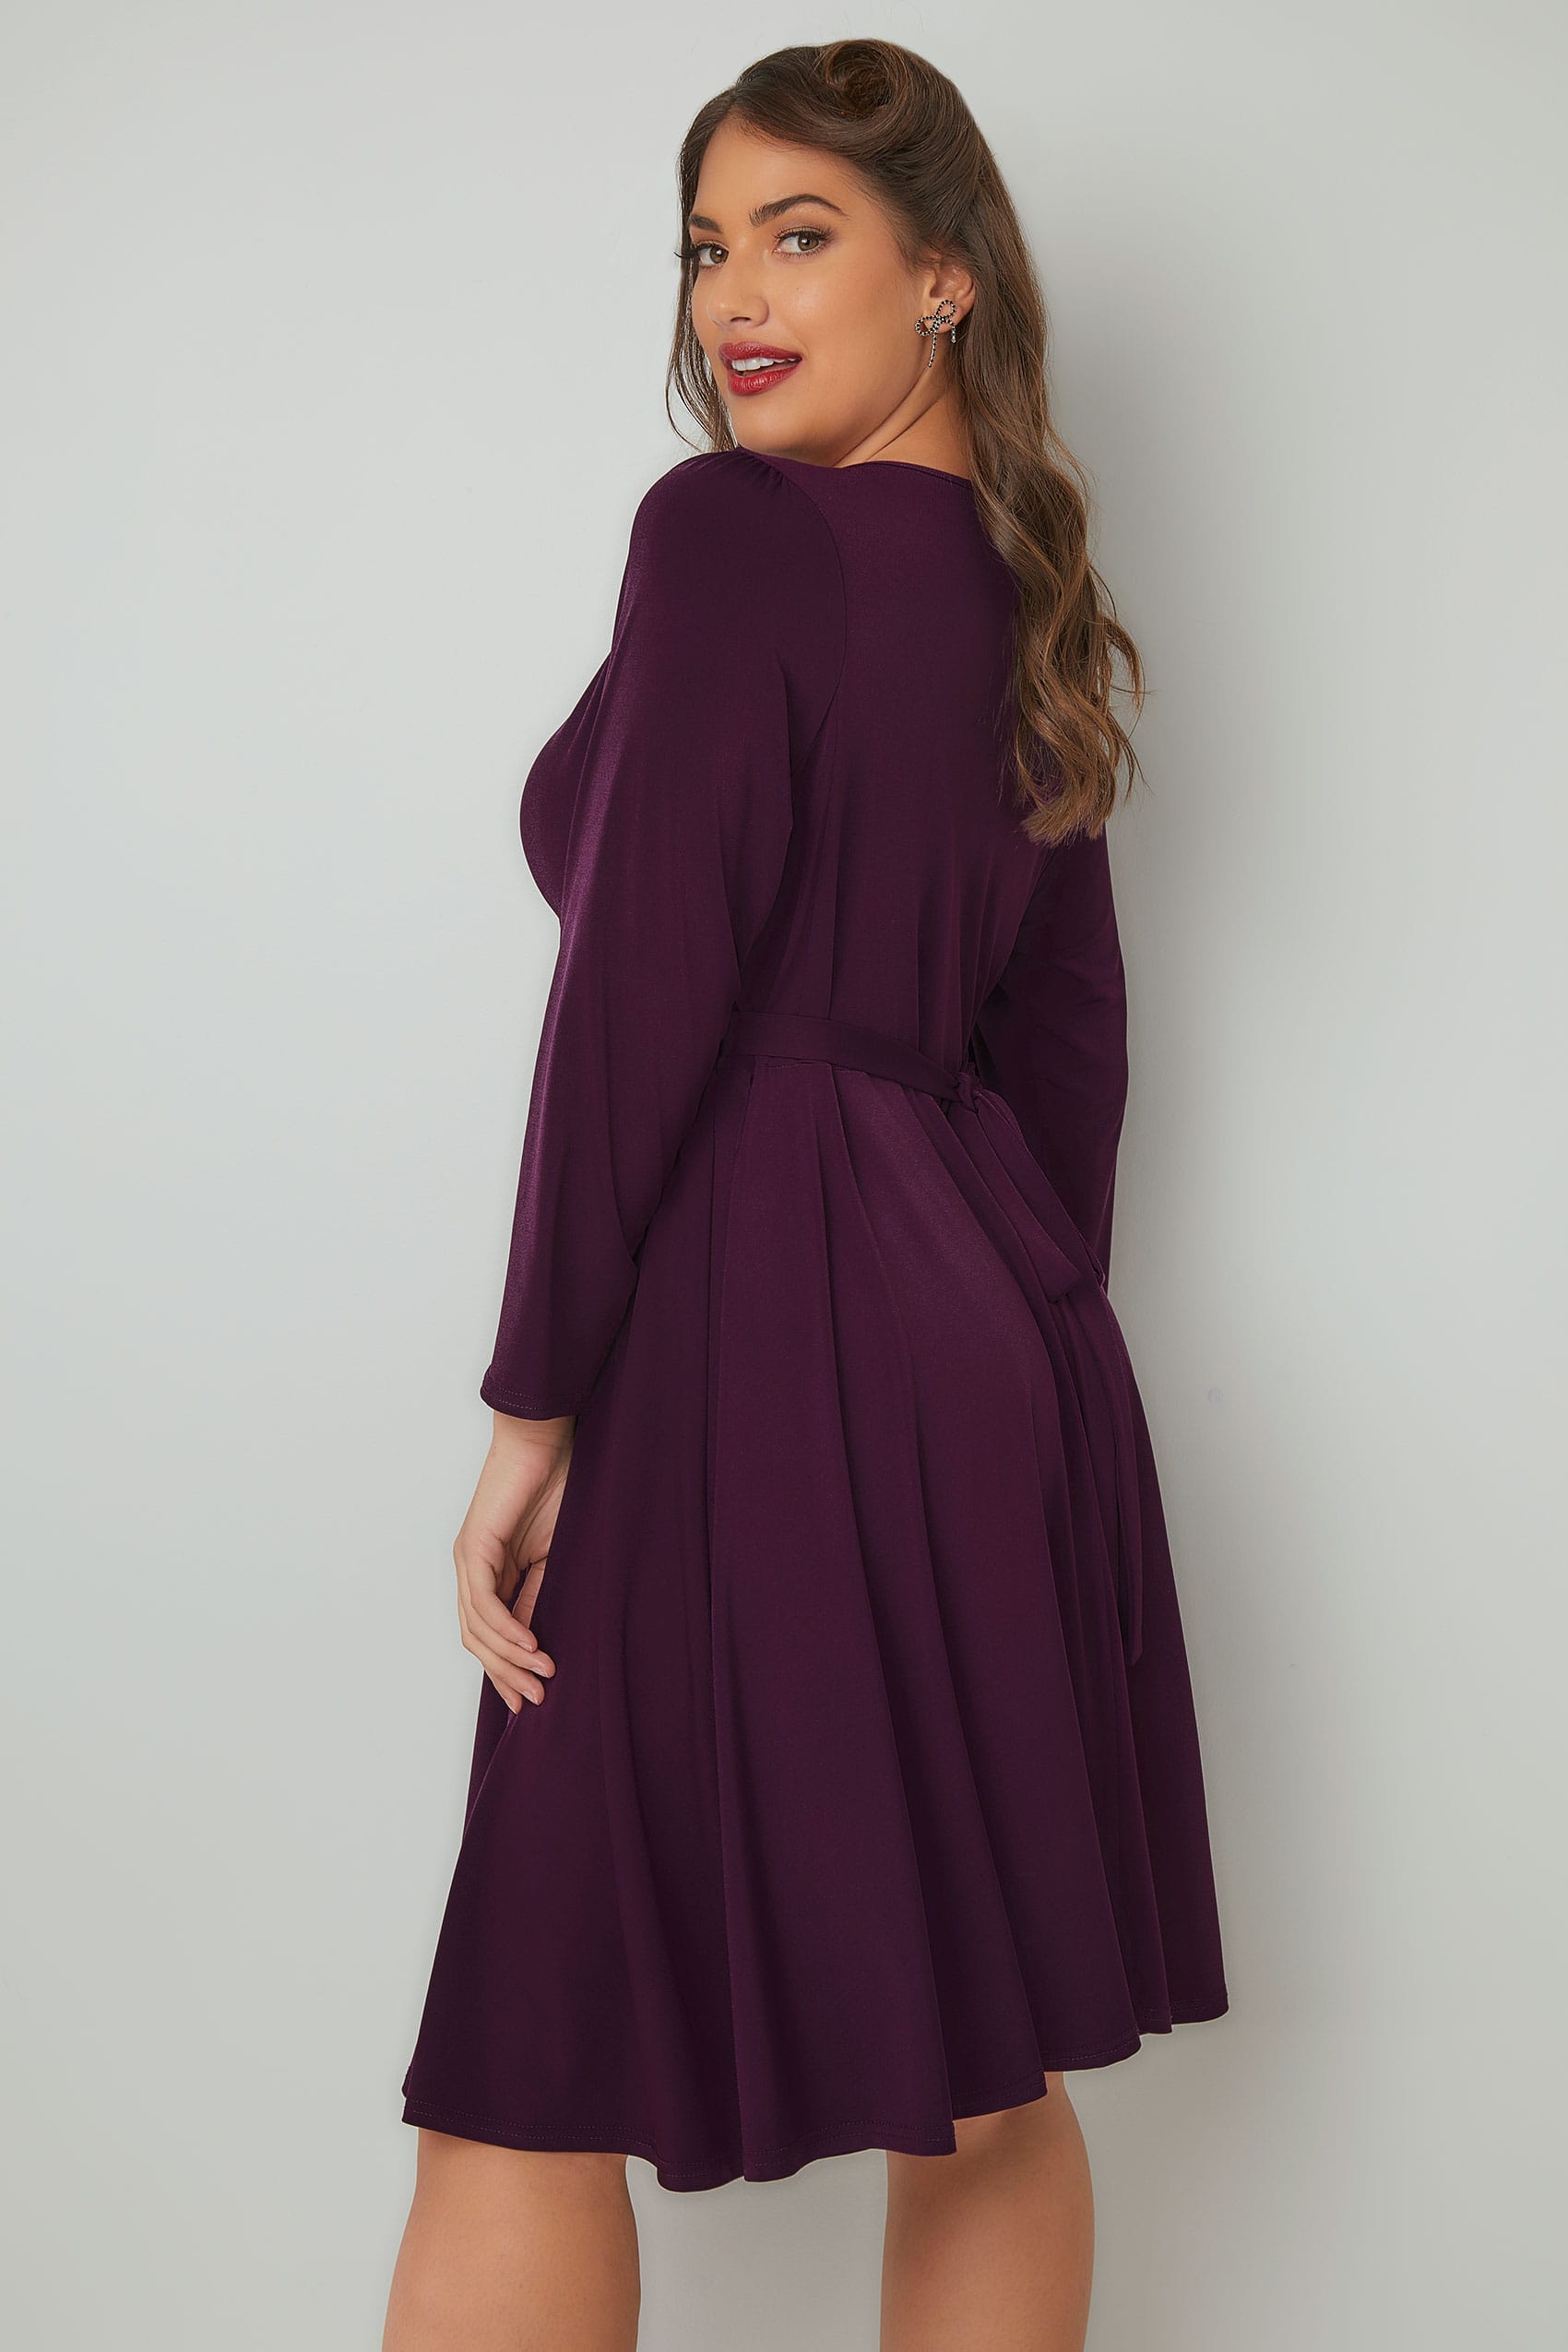 LADY VOLUPTUOUS Purple Lyra Dress, Plus size 16 to 32